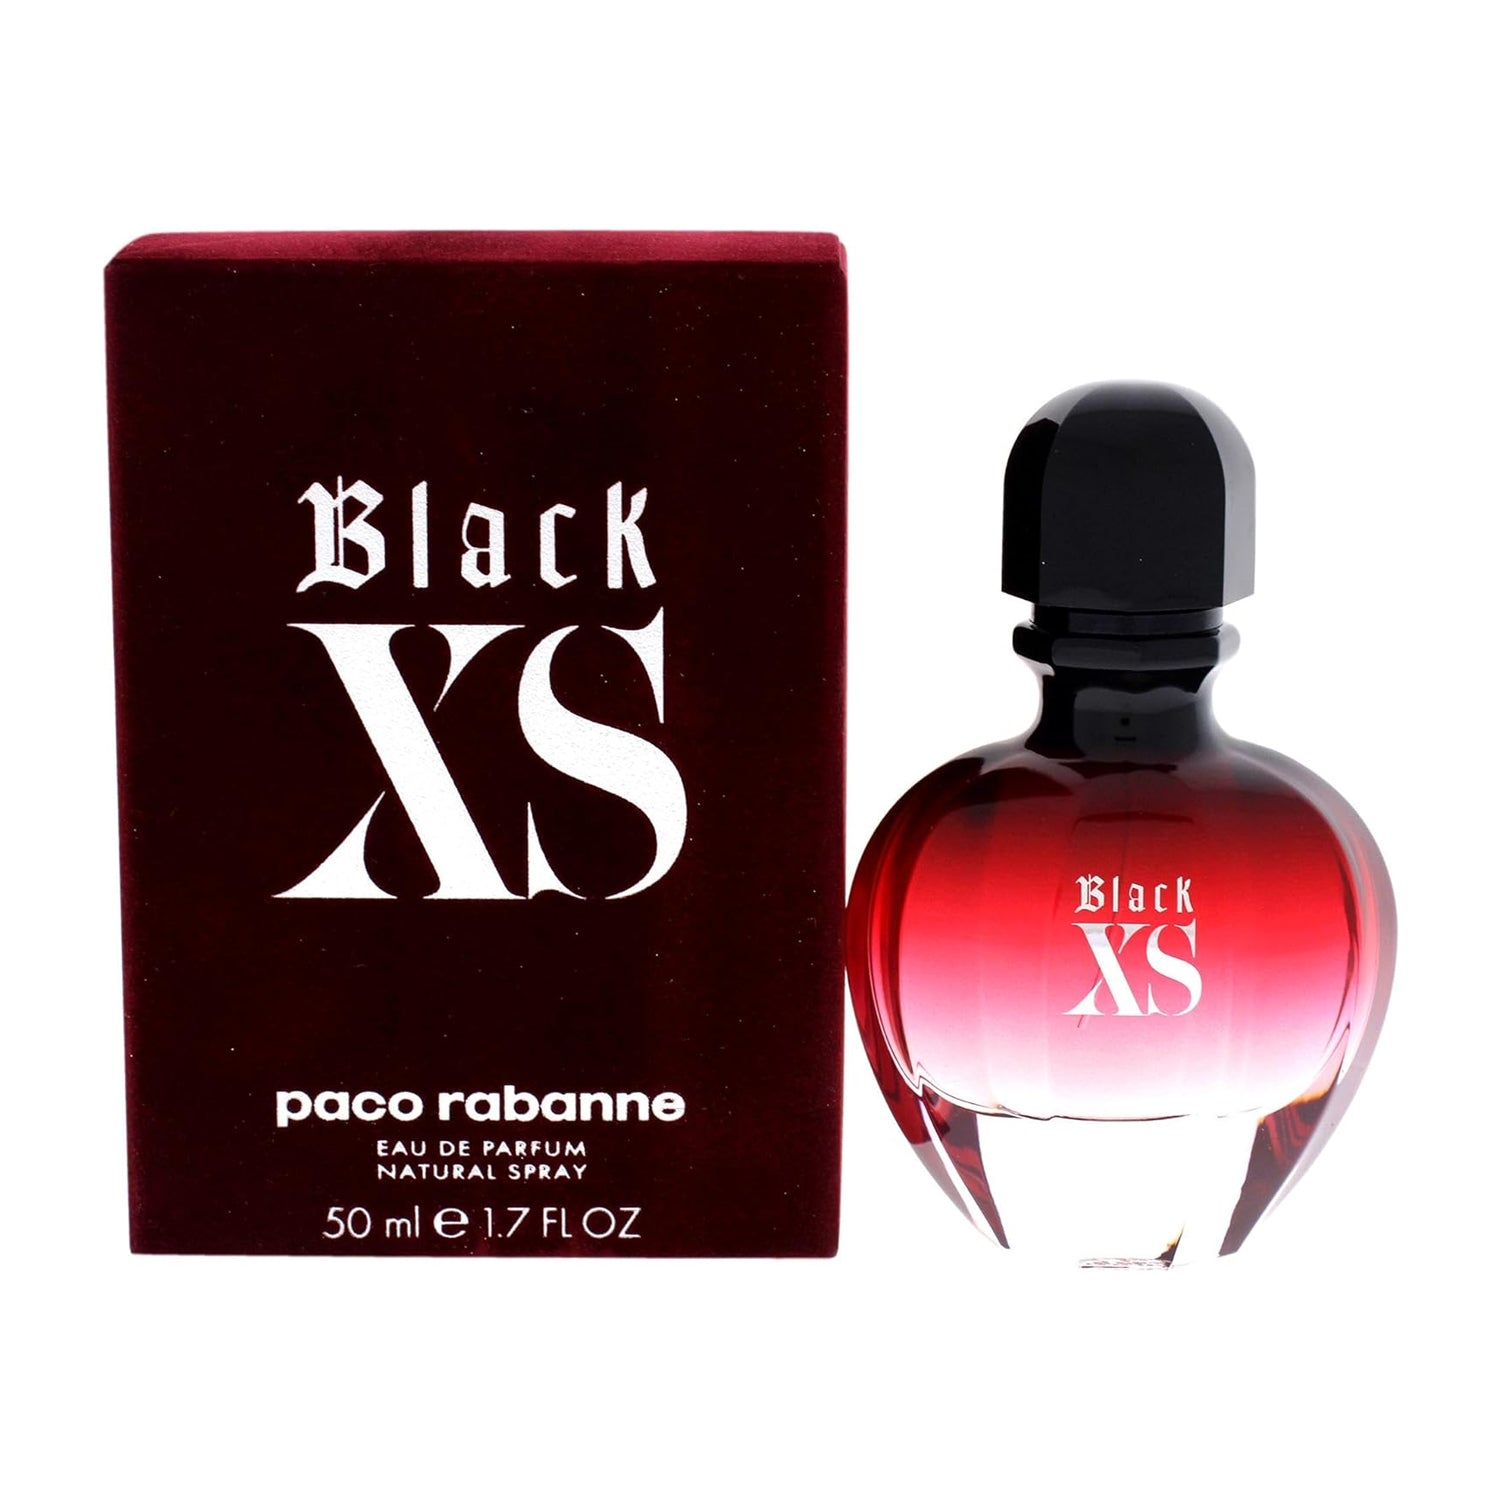 Paco Rabanne Black XS 50 ml Eau De Parfum Spray for Women